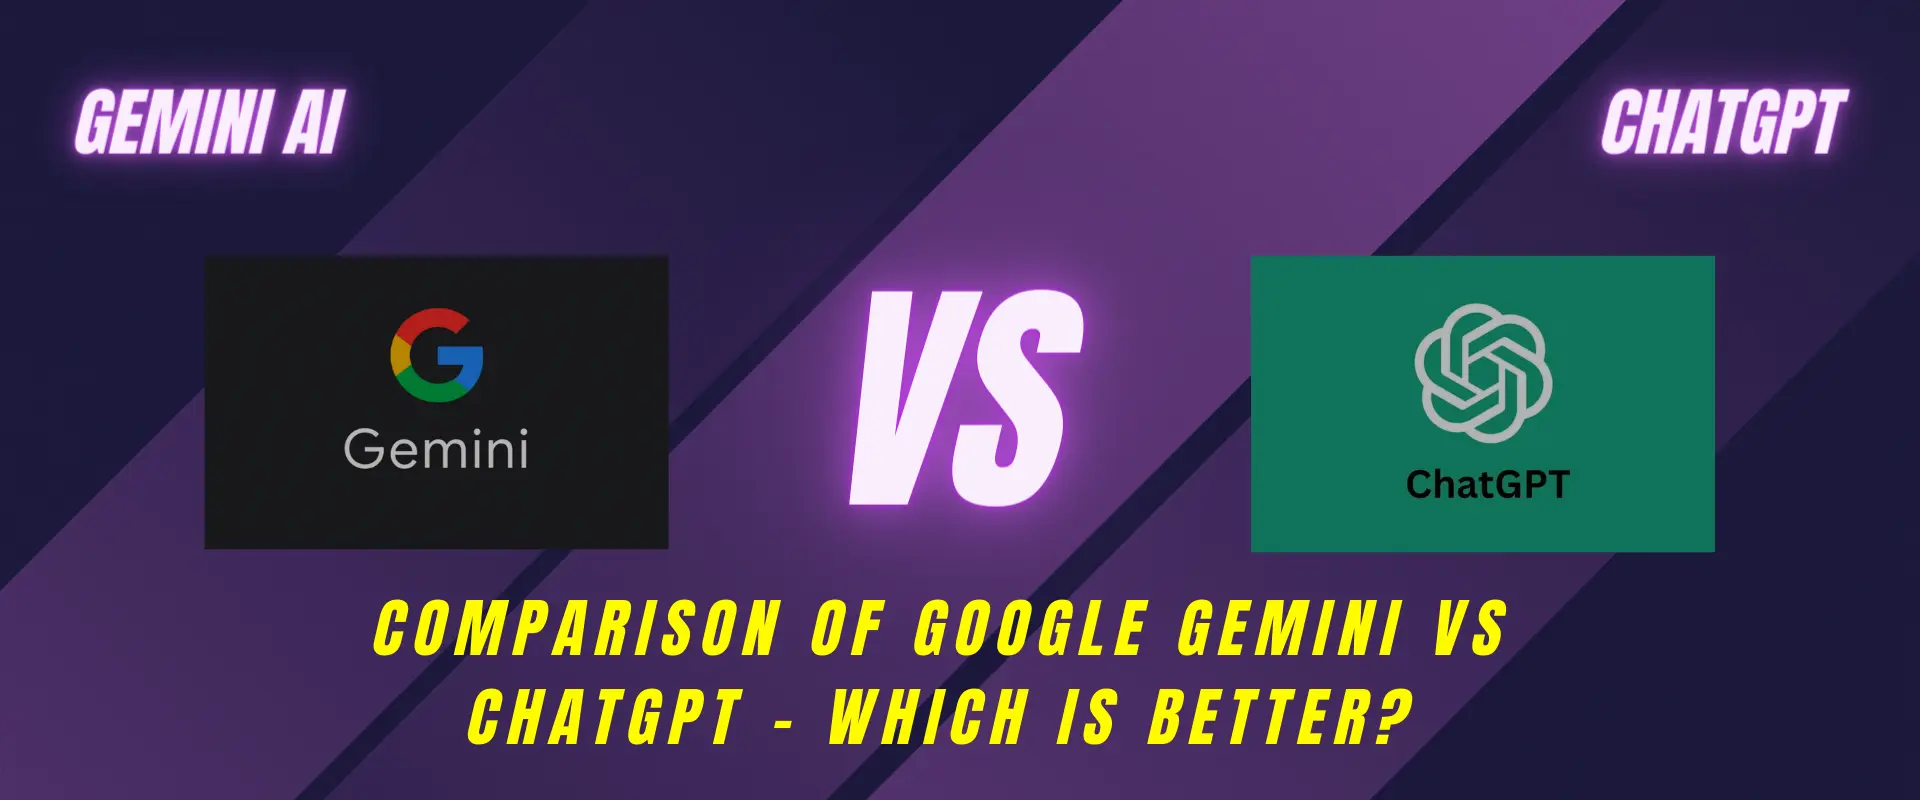 google gemini vs chatgpt